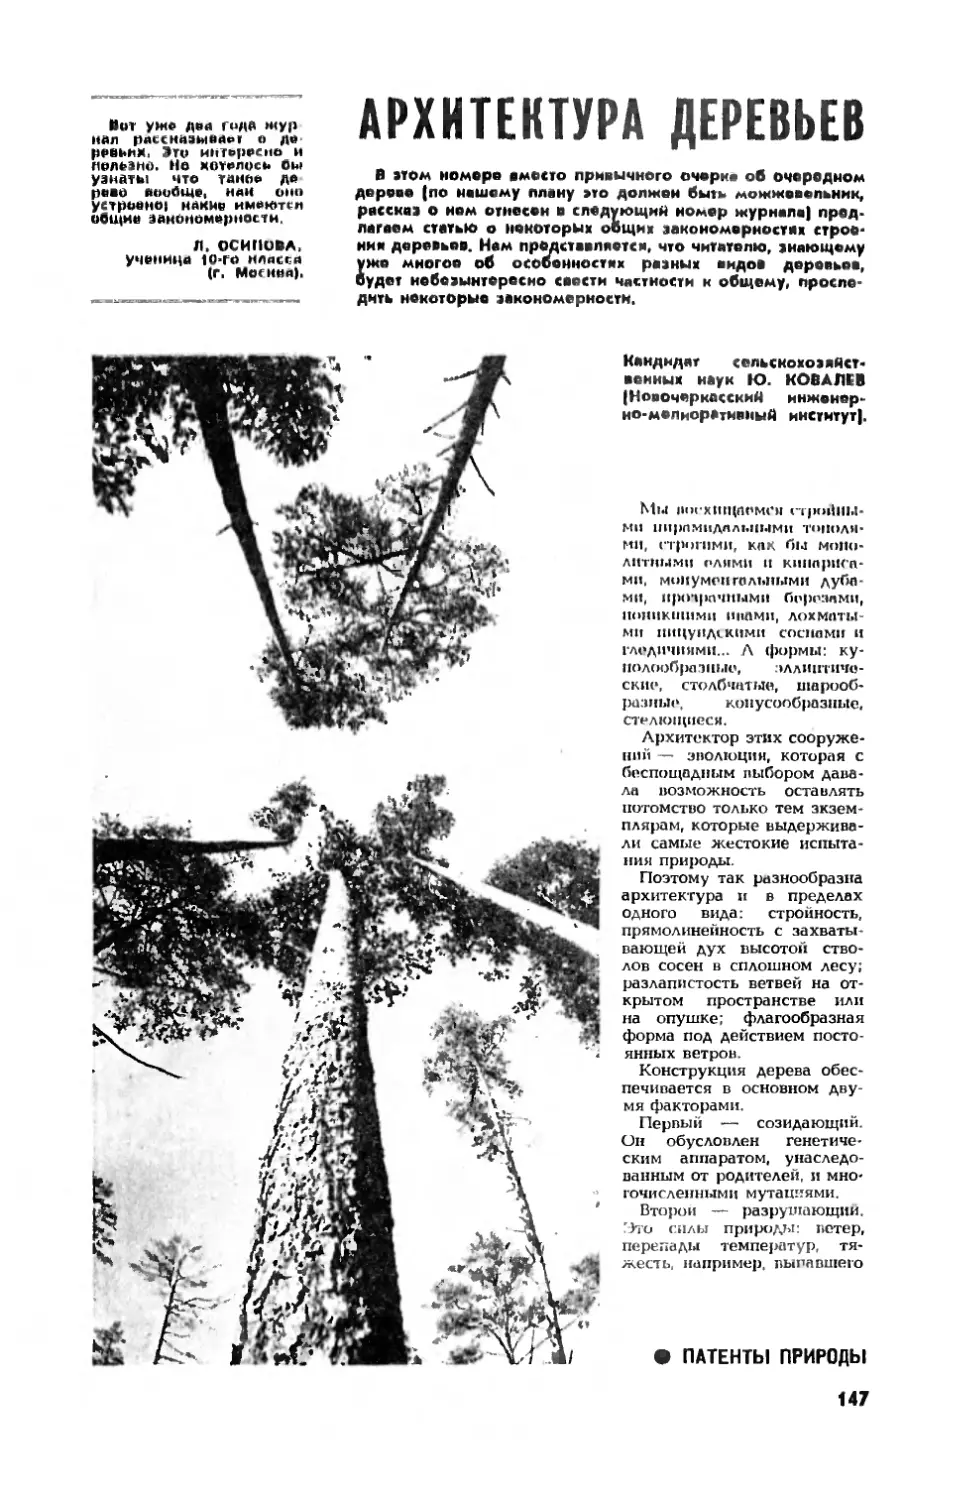 Ю. КОВАЛЕВ, канд. сельхоз. наук — Архитектура деревьев